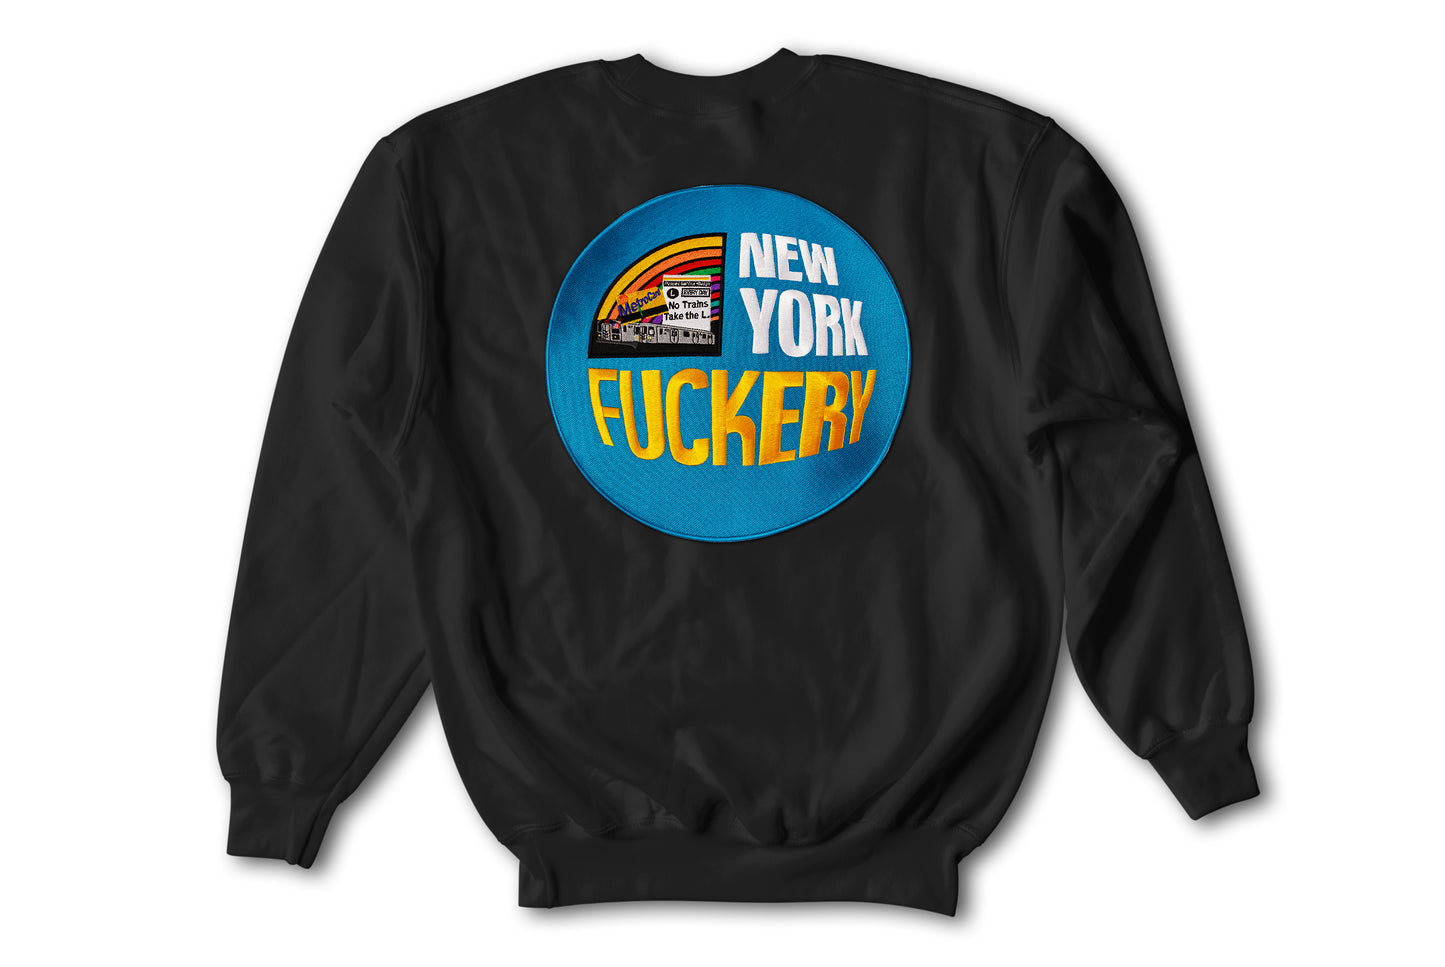 New York Fuckery Patch on Black Crewneck